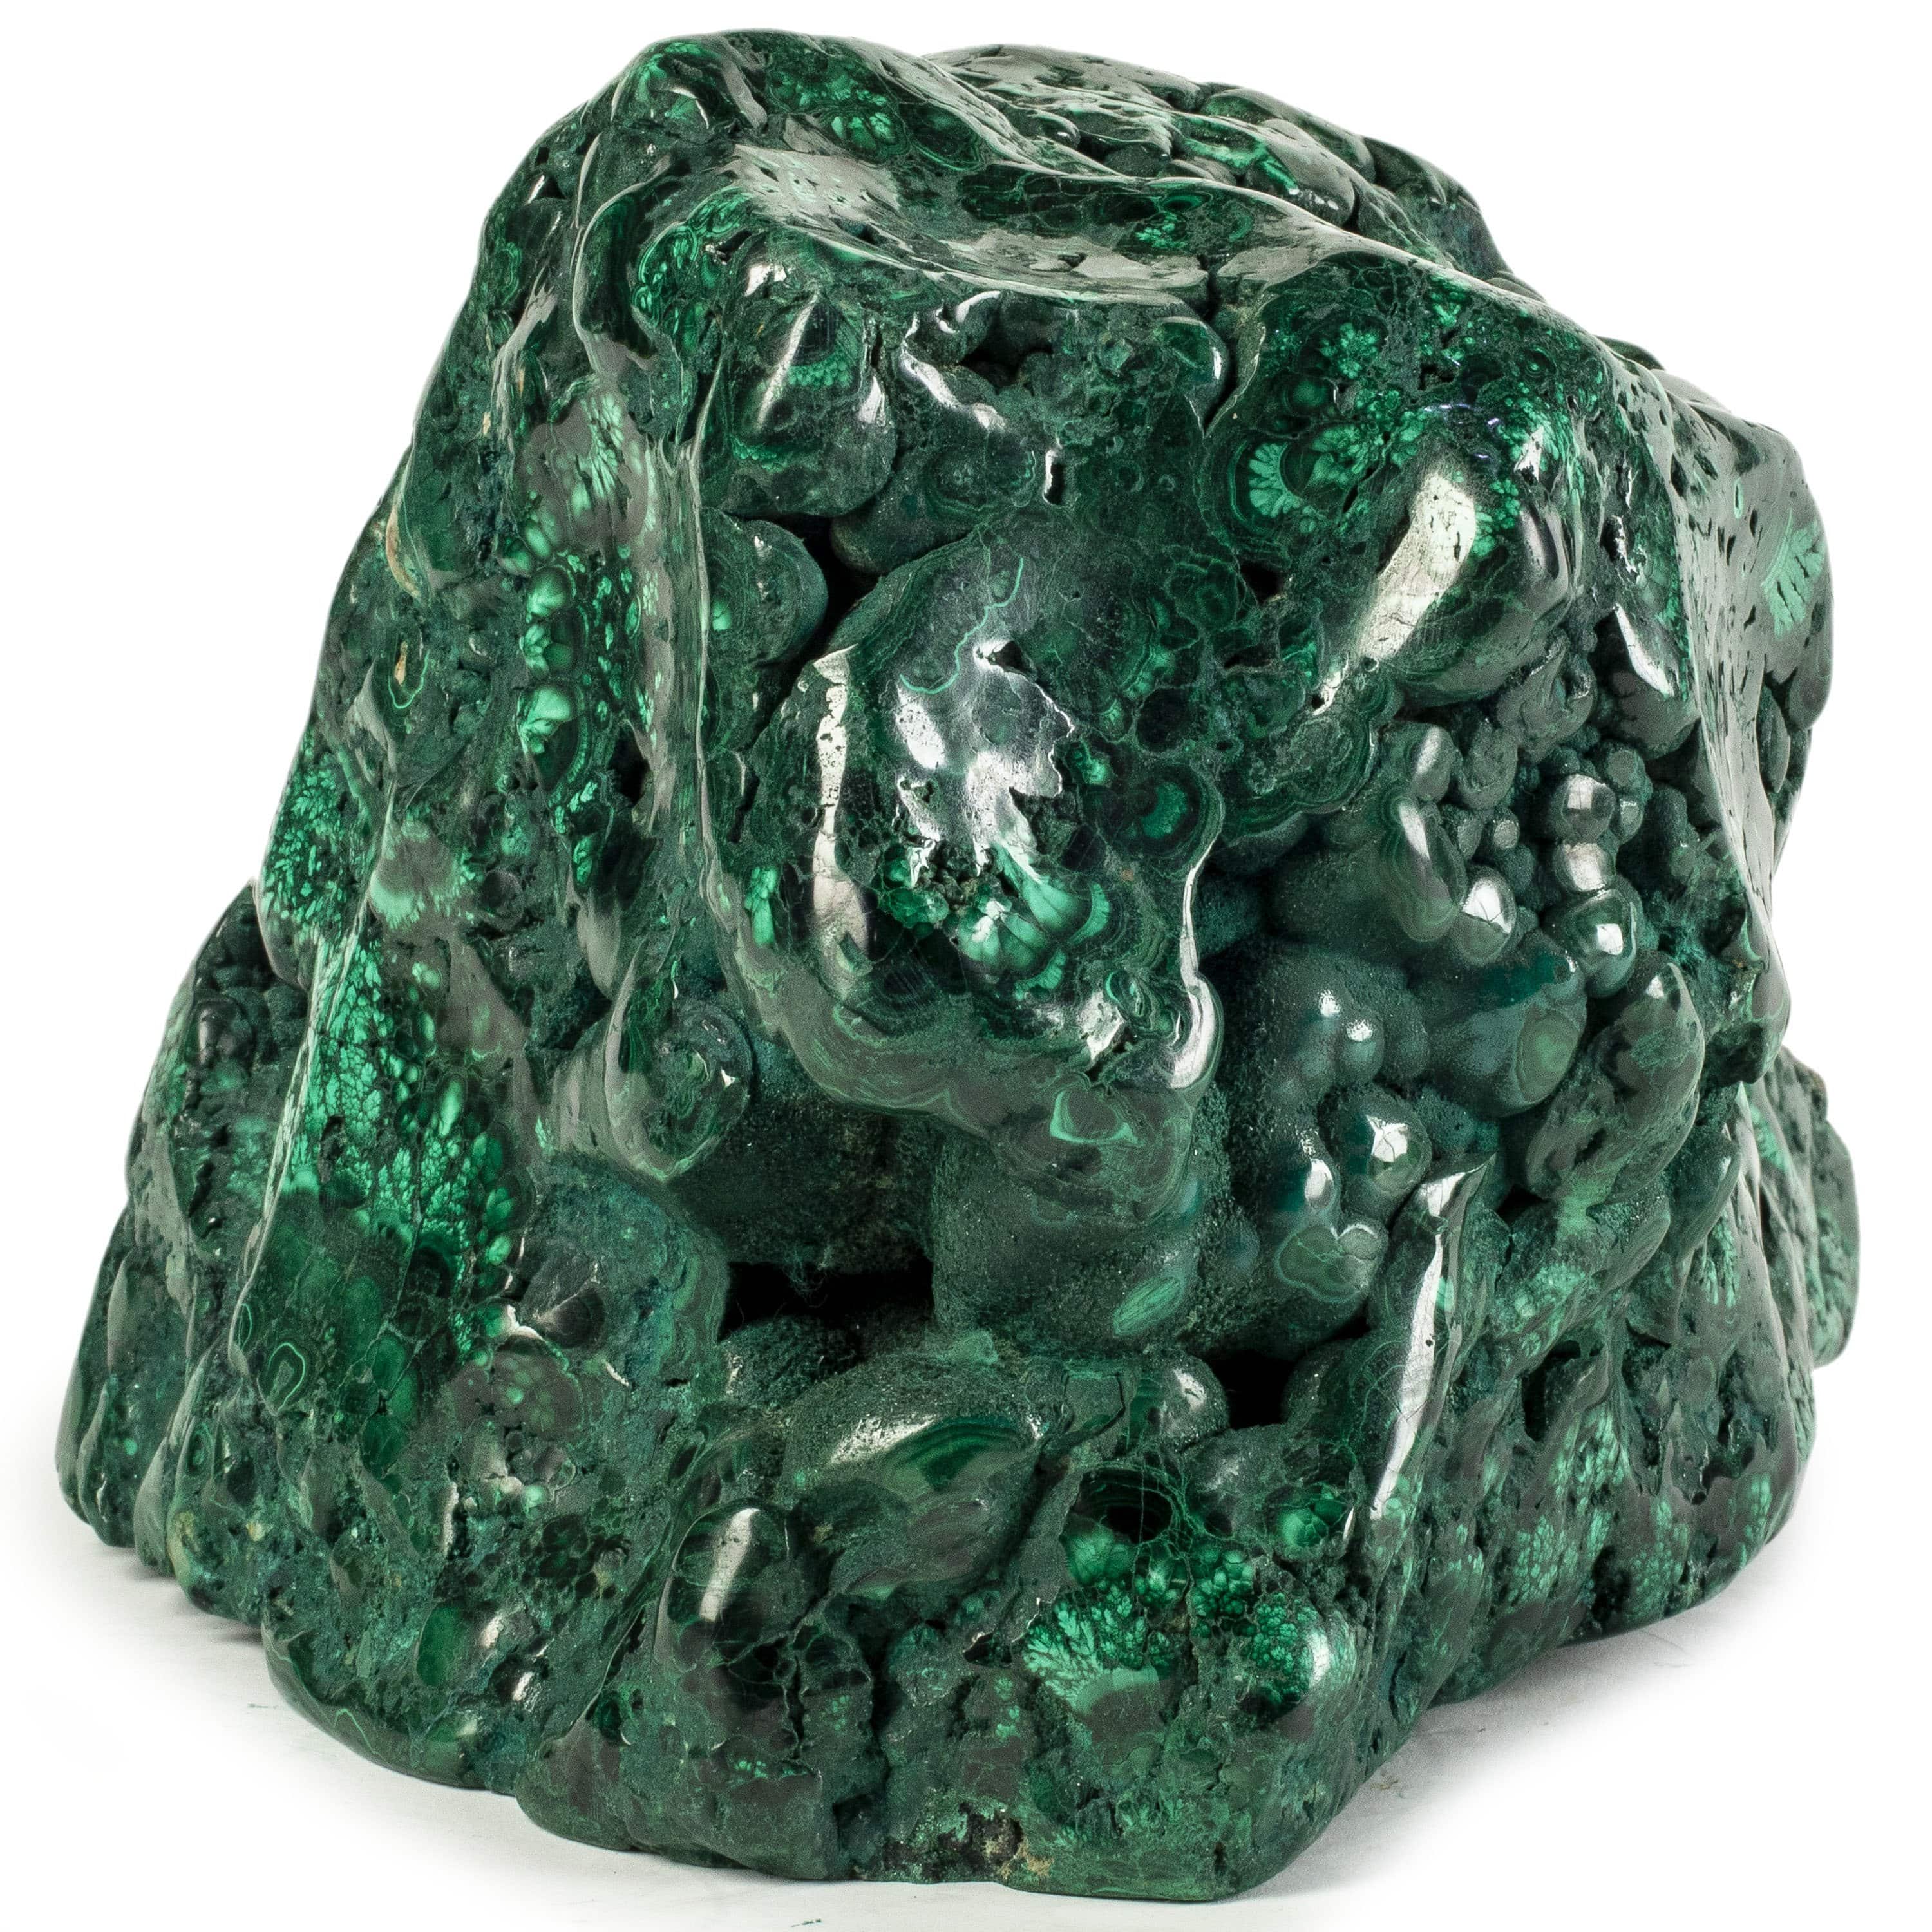 Kalifano Malachite Rare Natural Green Malachite Polished Freeform Specimen from Congo - 15.3 kg / 33.7 lbs MA9700.001